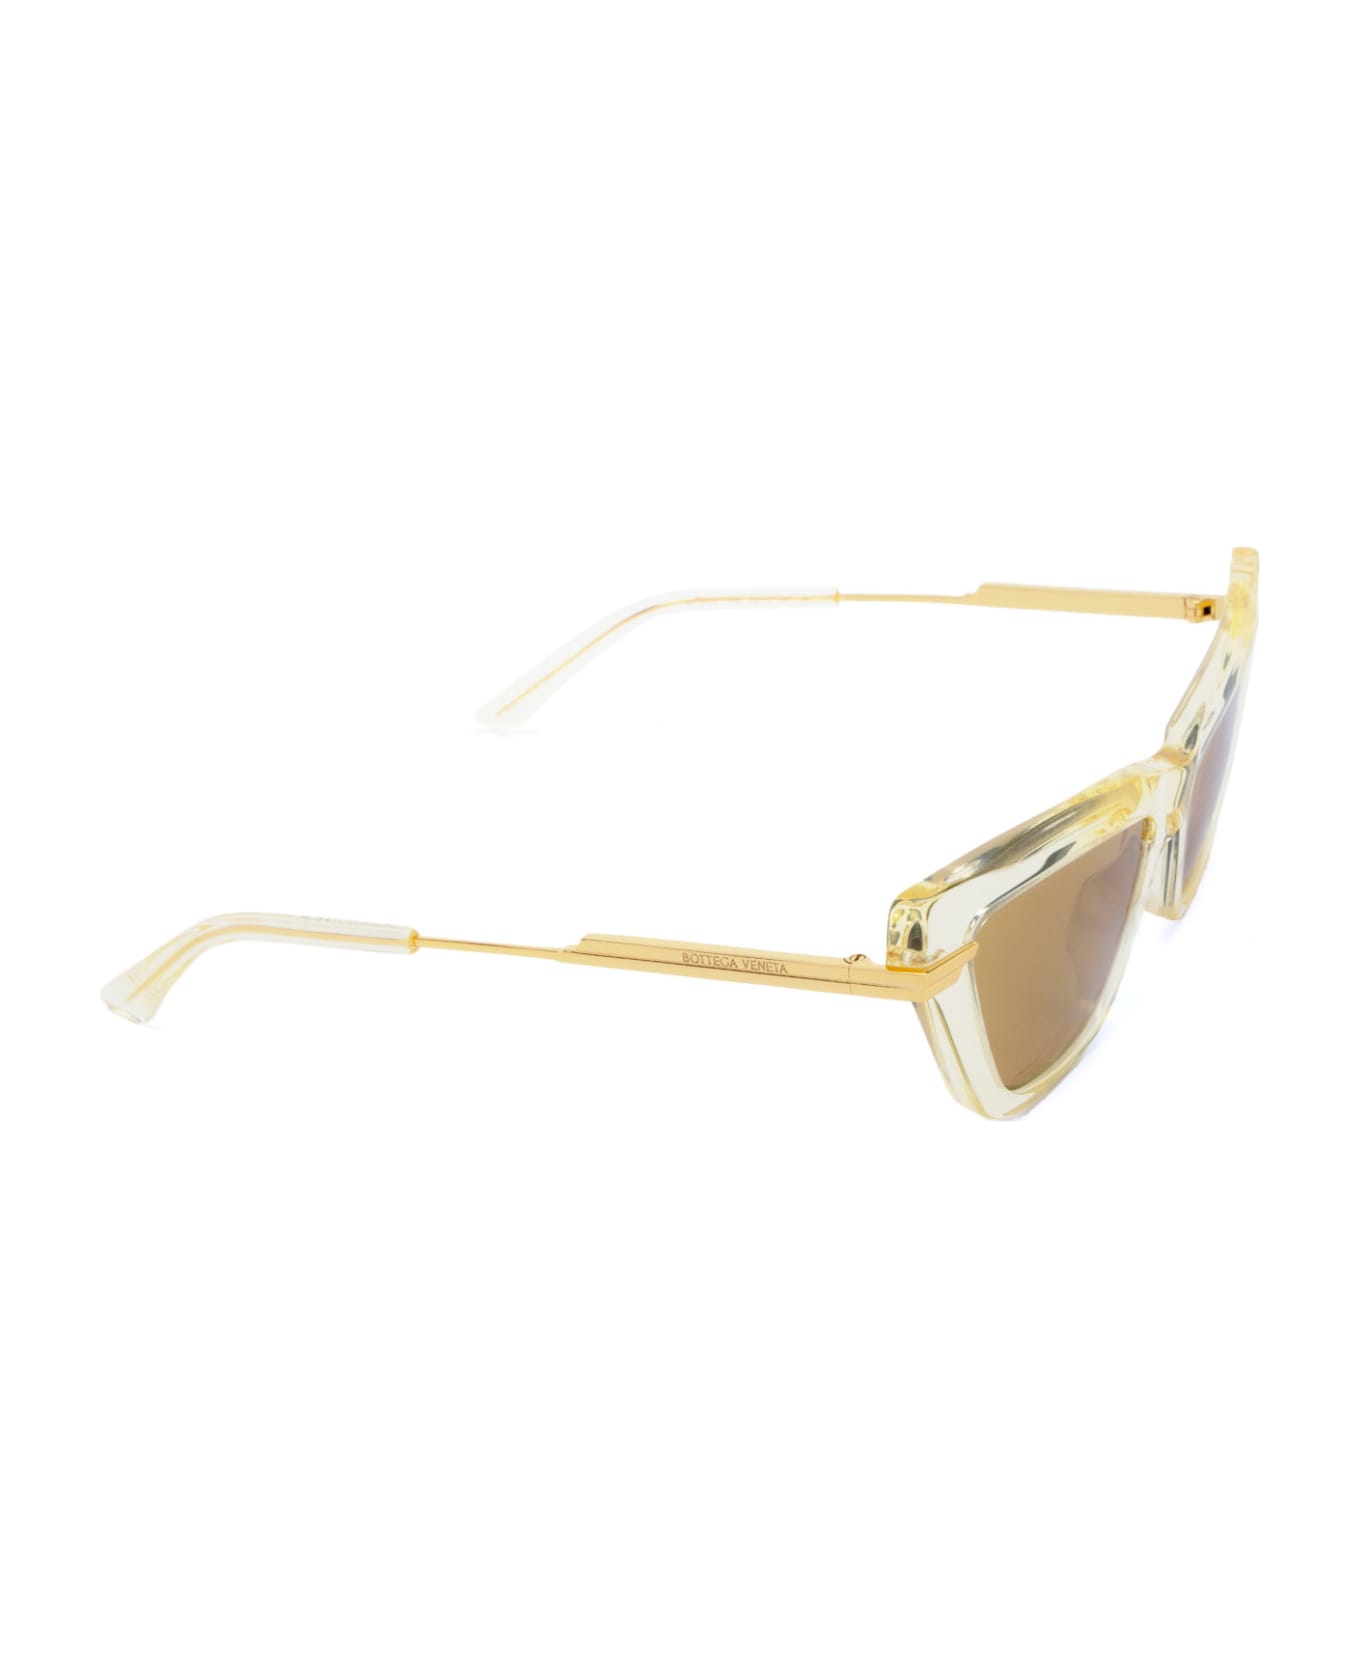 Bottega Veneta Eyewear Bv1241s Yellow Sunglasses - Yellow